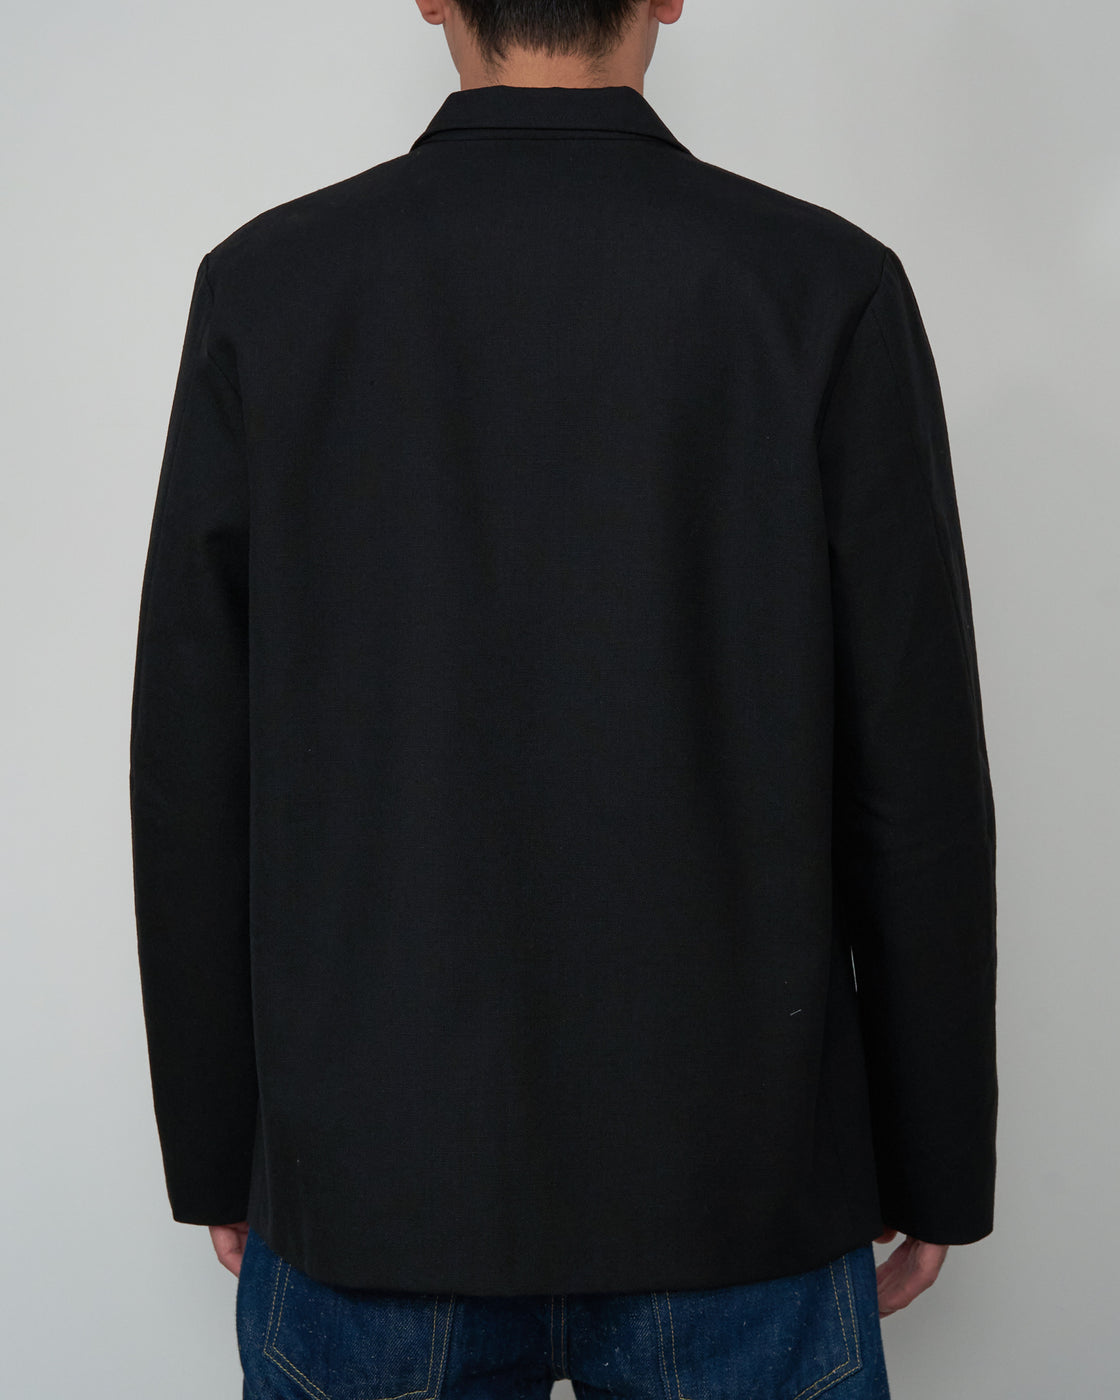 Dhal Tailored Jacket, Black